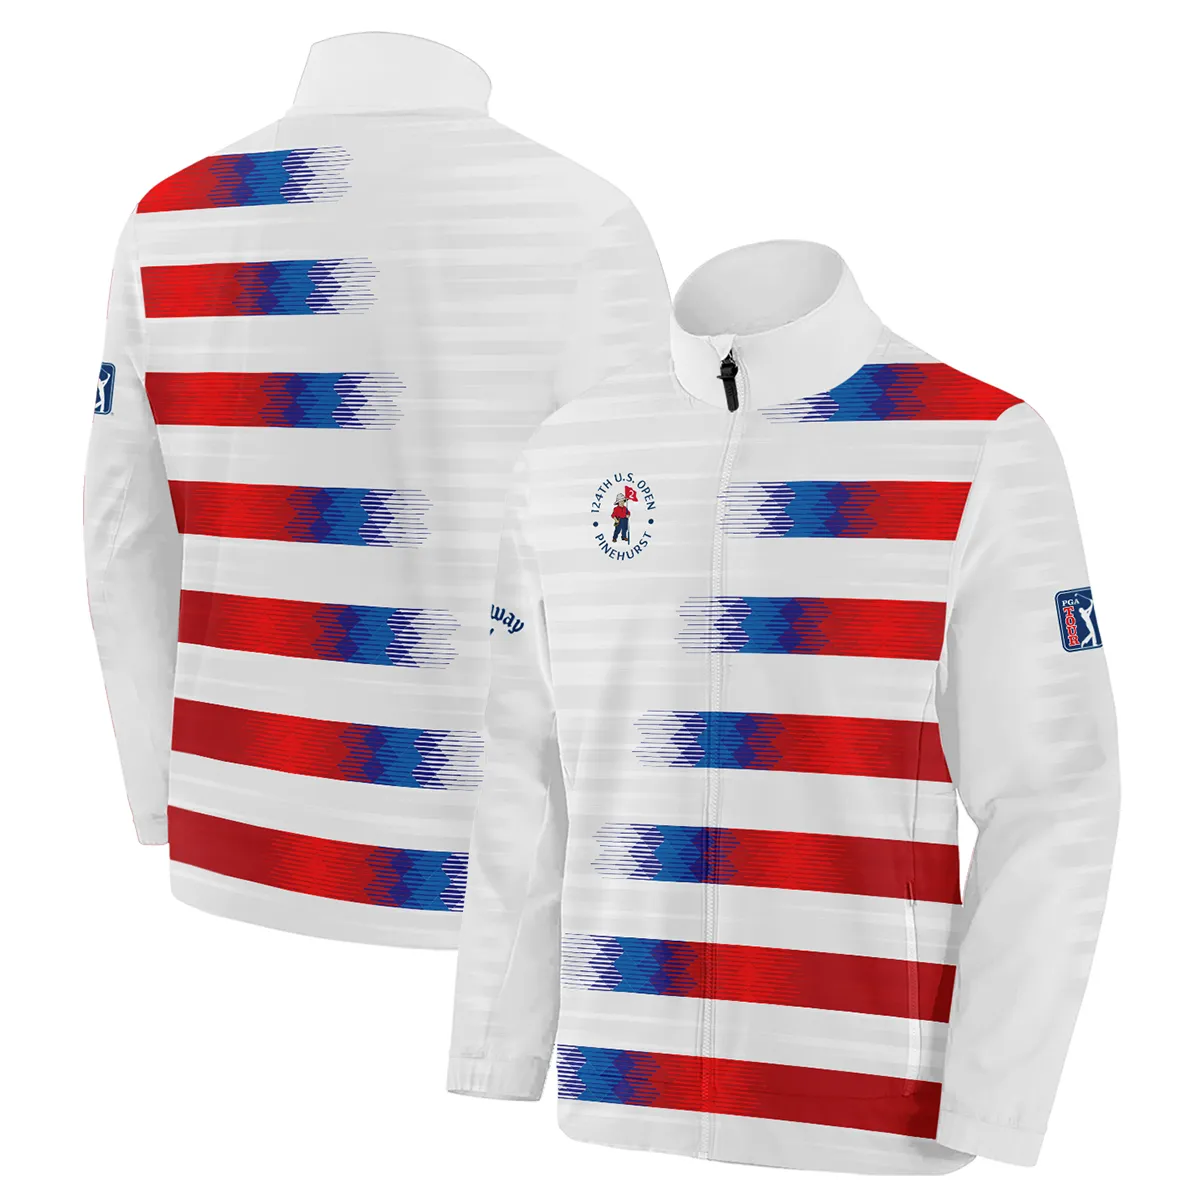 124th U.S. Open Pinehurst Callaway Polo Shirt Sports Blue Red White Pattern All Over Print Polo Shirt For Men